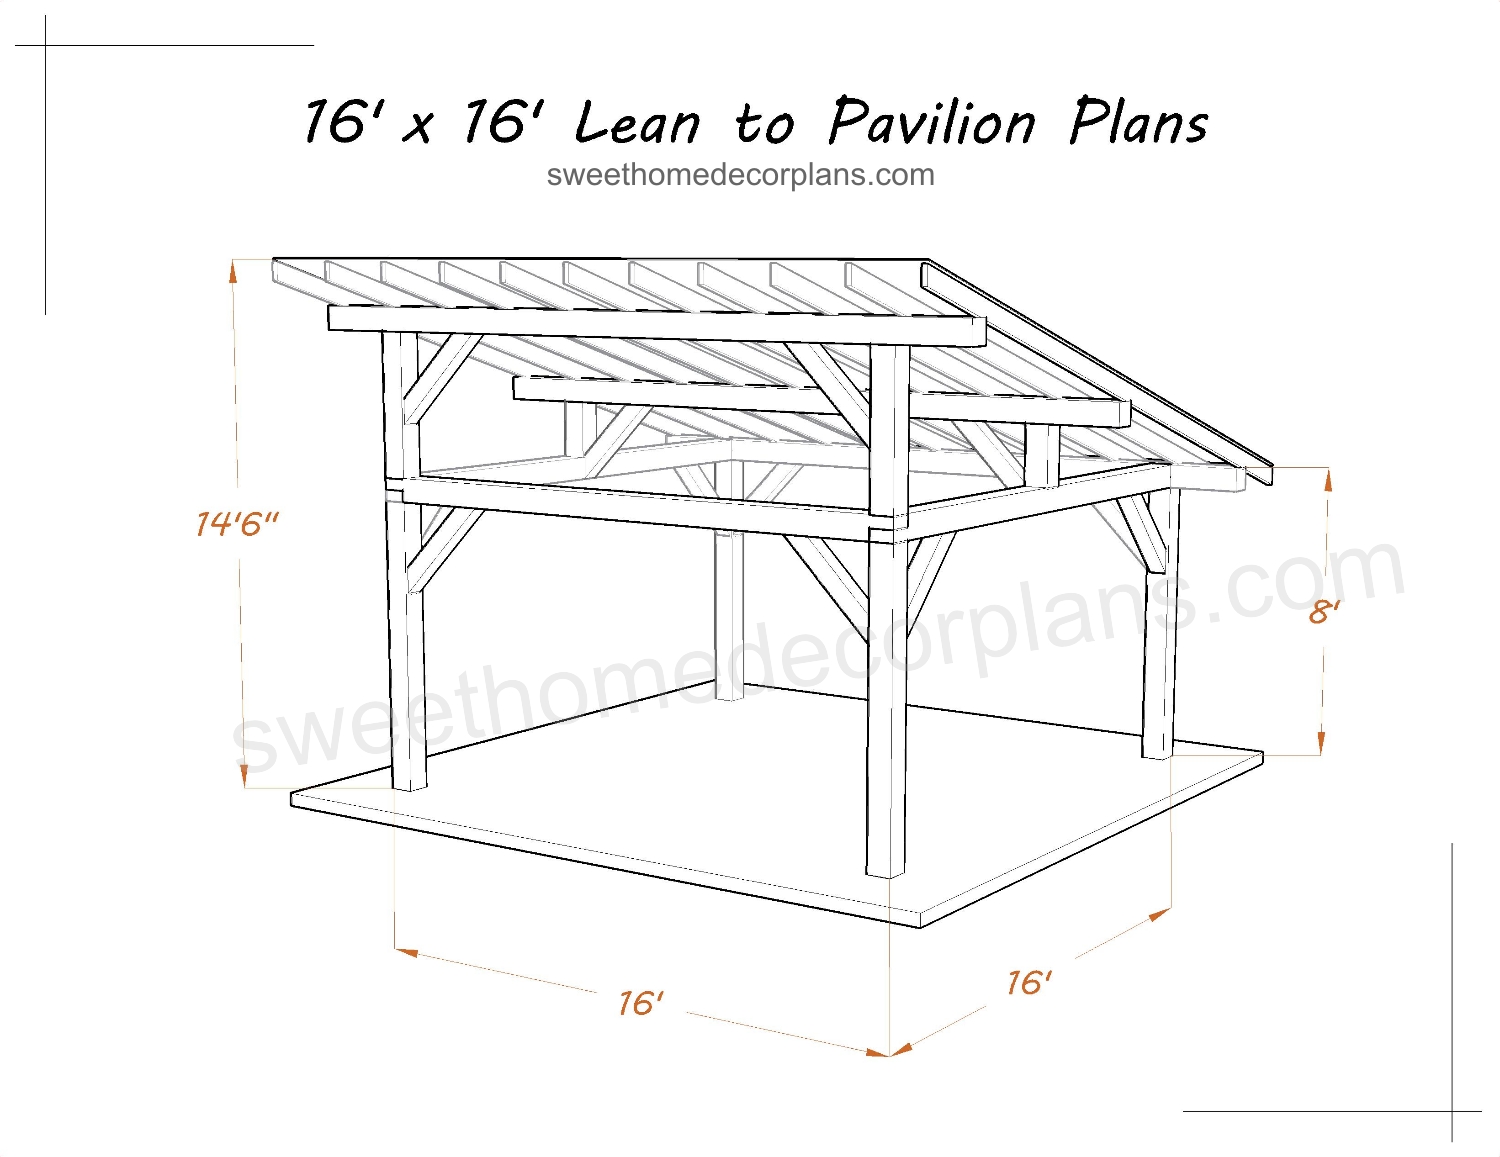 Diy-16-x-16-lean-to-gazebo-plans-carport-in-pdf